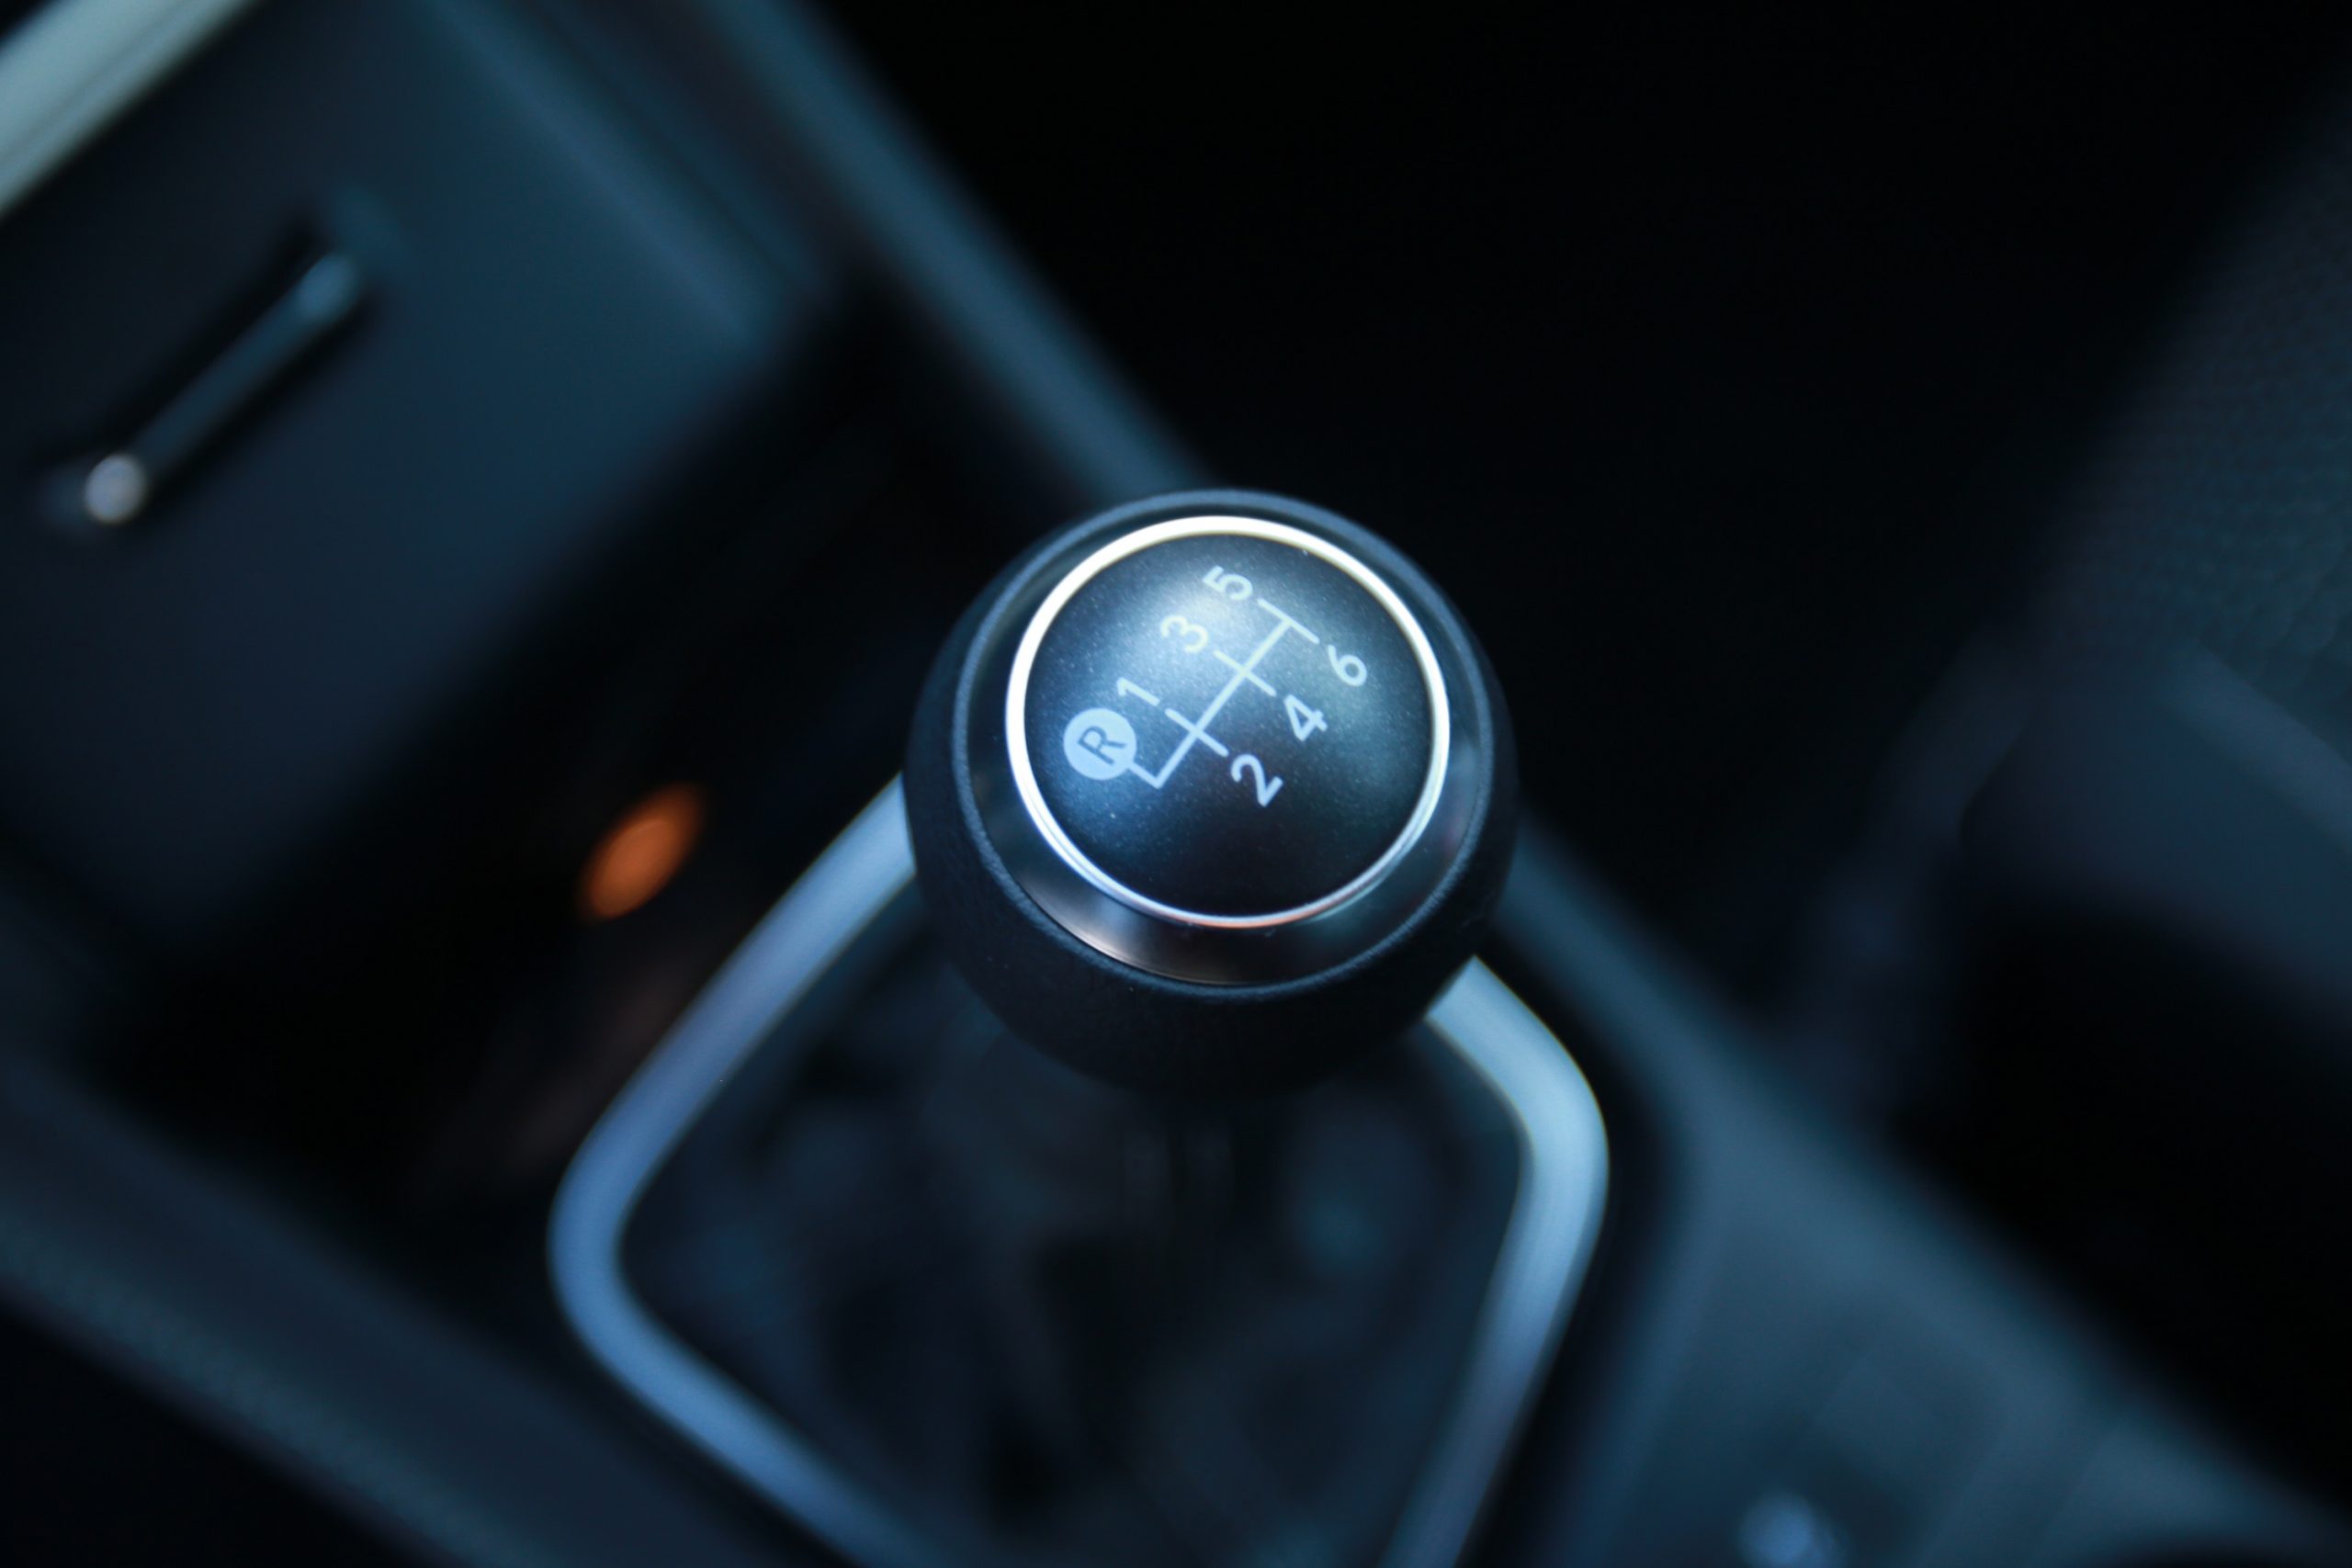 The six-speed manual transmission in the Corolla sedan